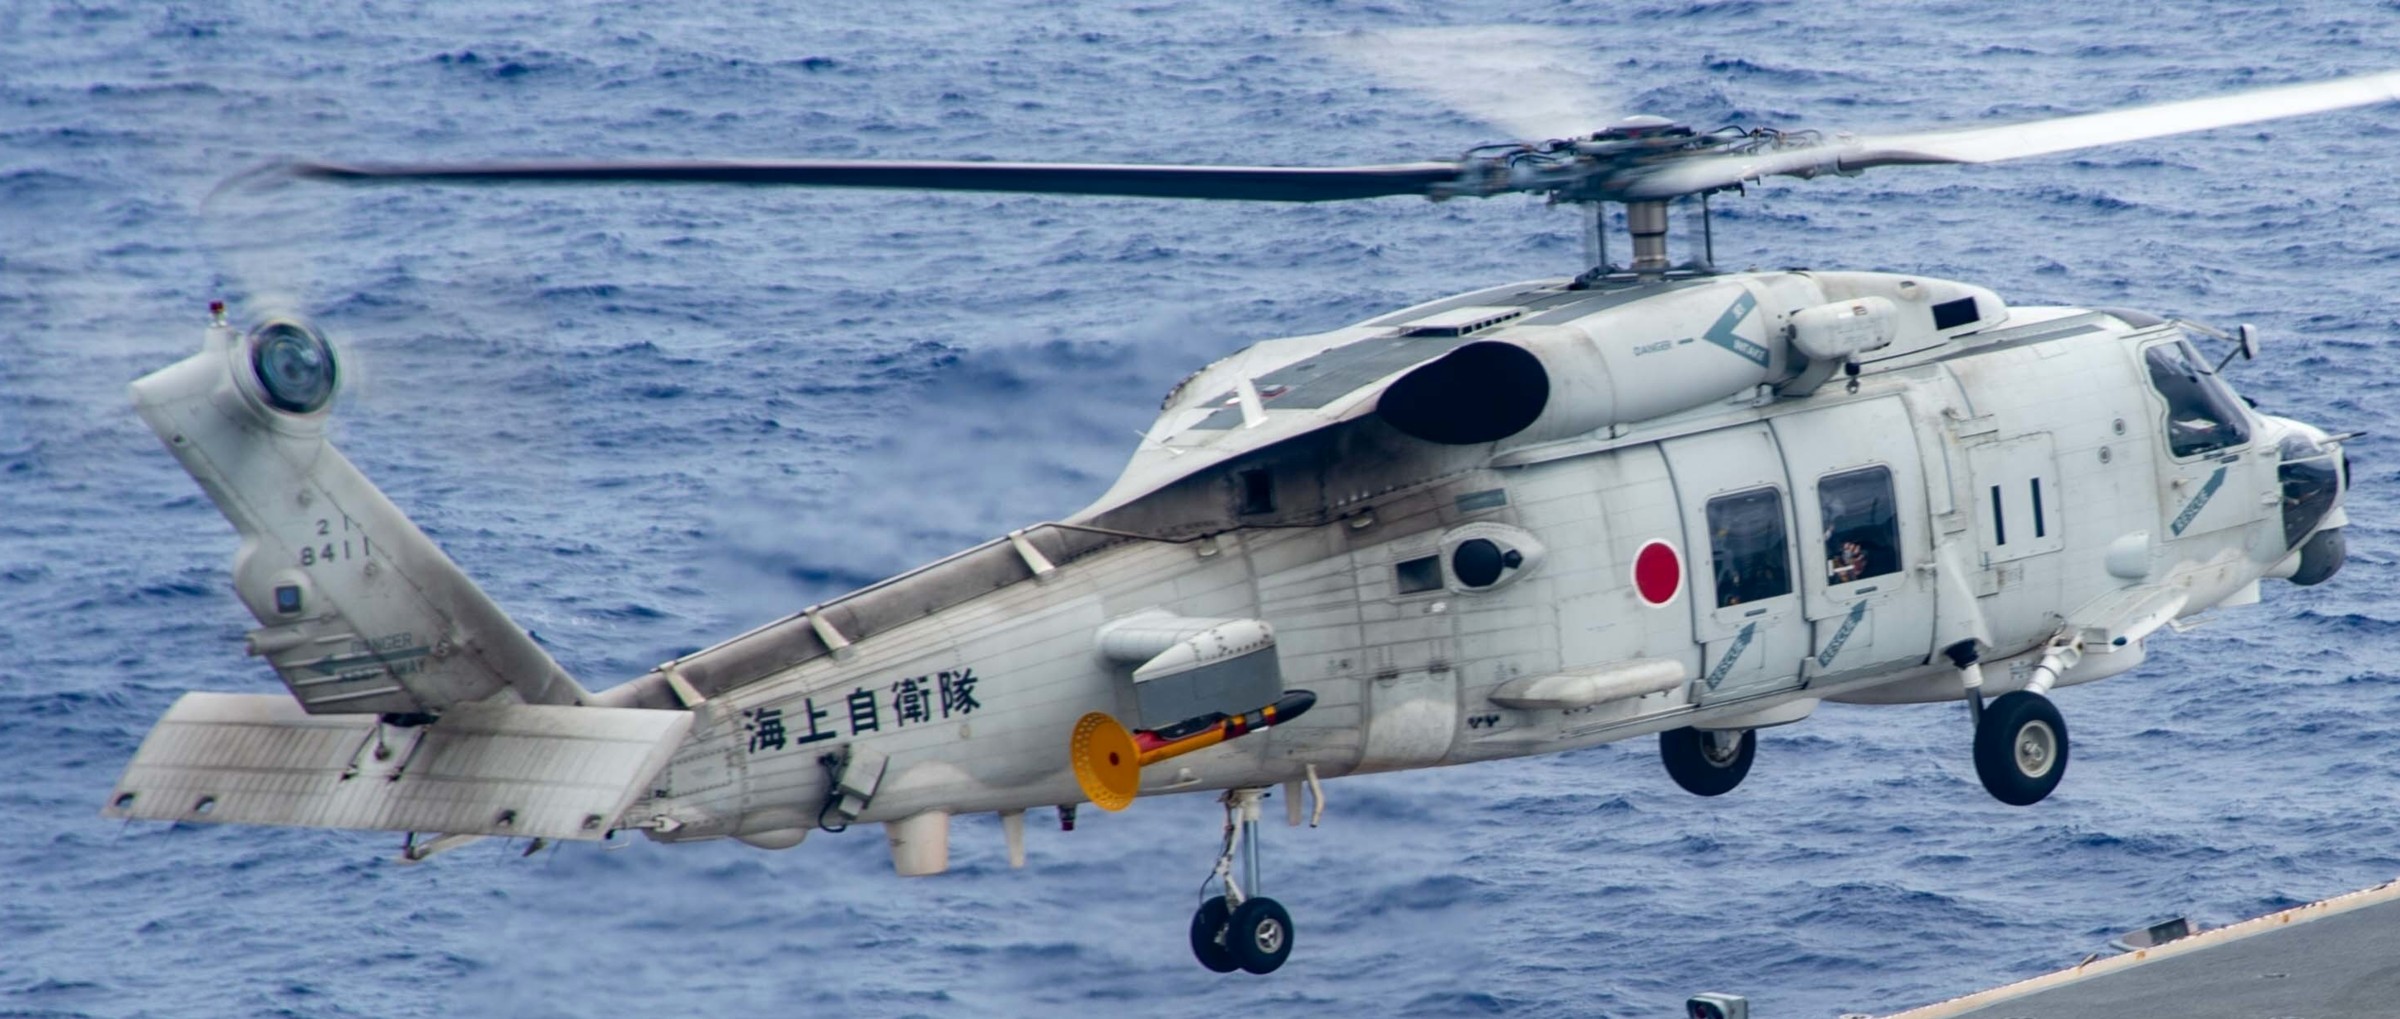 mitsubishi sh-60k helicopter anti submarine japan maritime self defense force jmsdf navy seahawk 8411 07